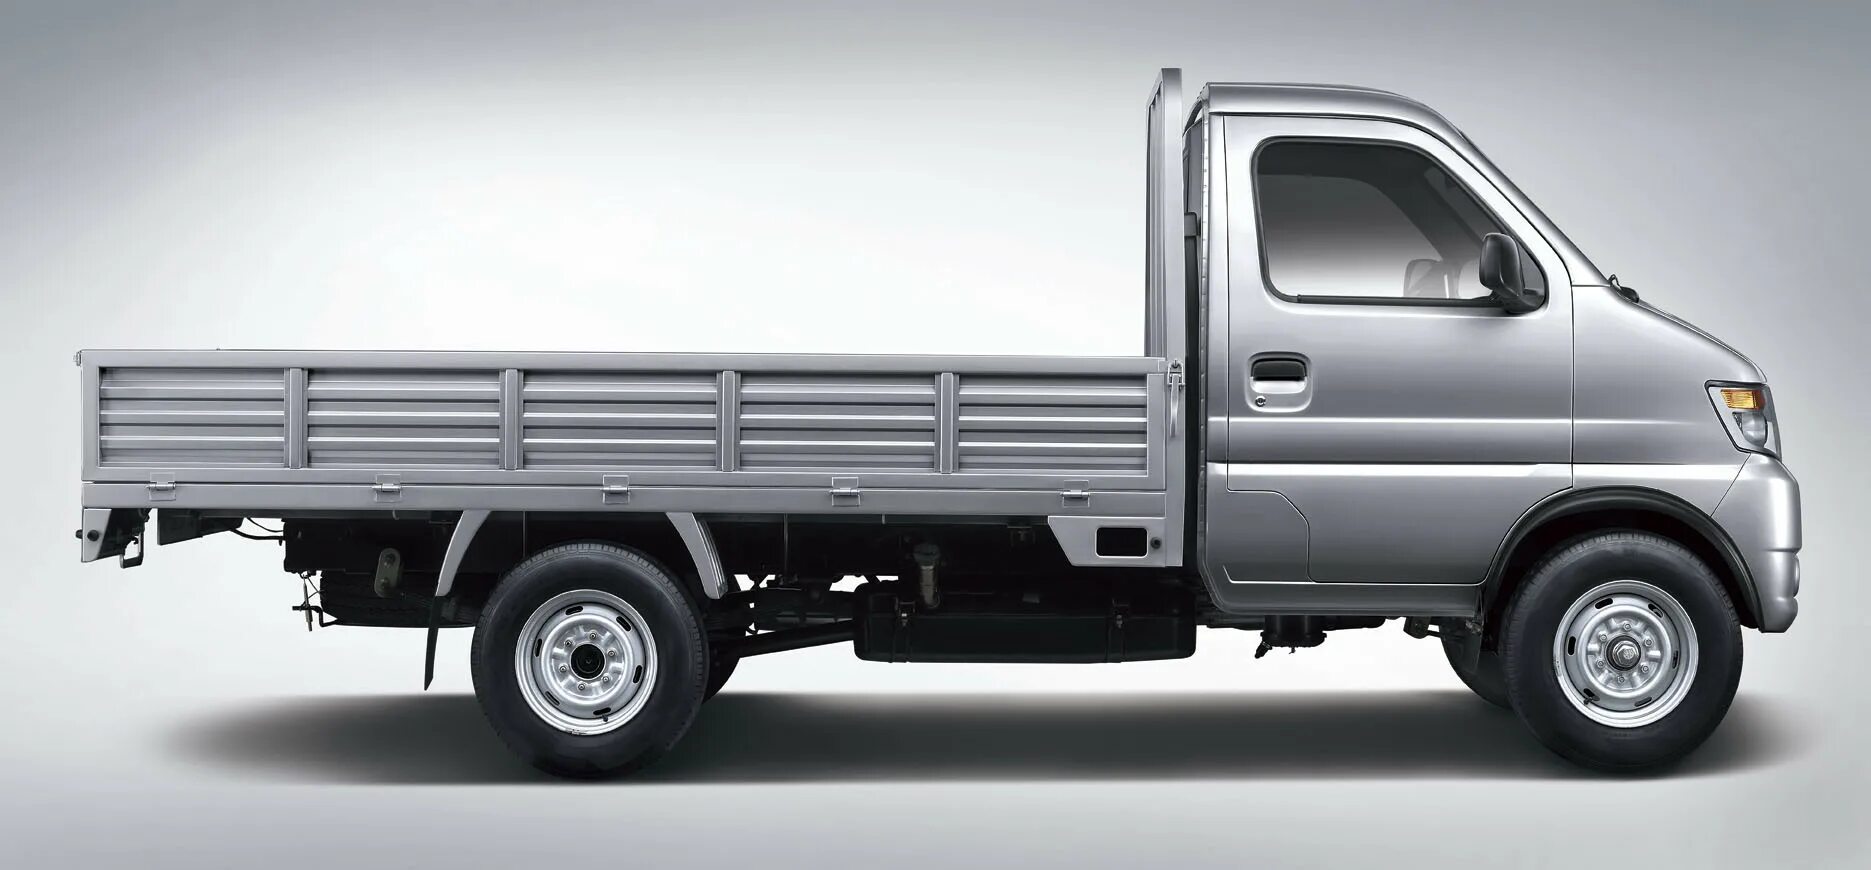 Чанган грузовик 1.5. Чанган фургон мини грузовик. Чанган грузовой 2,5 тонны. Чанган грузовик 5 т.